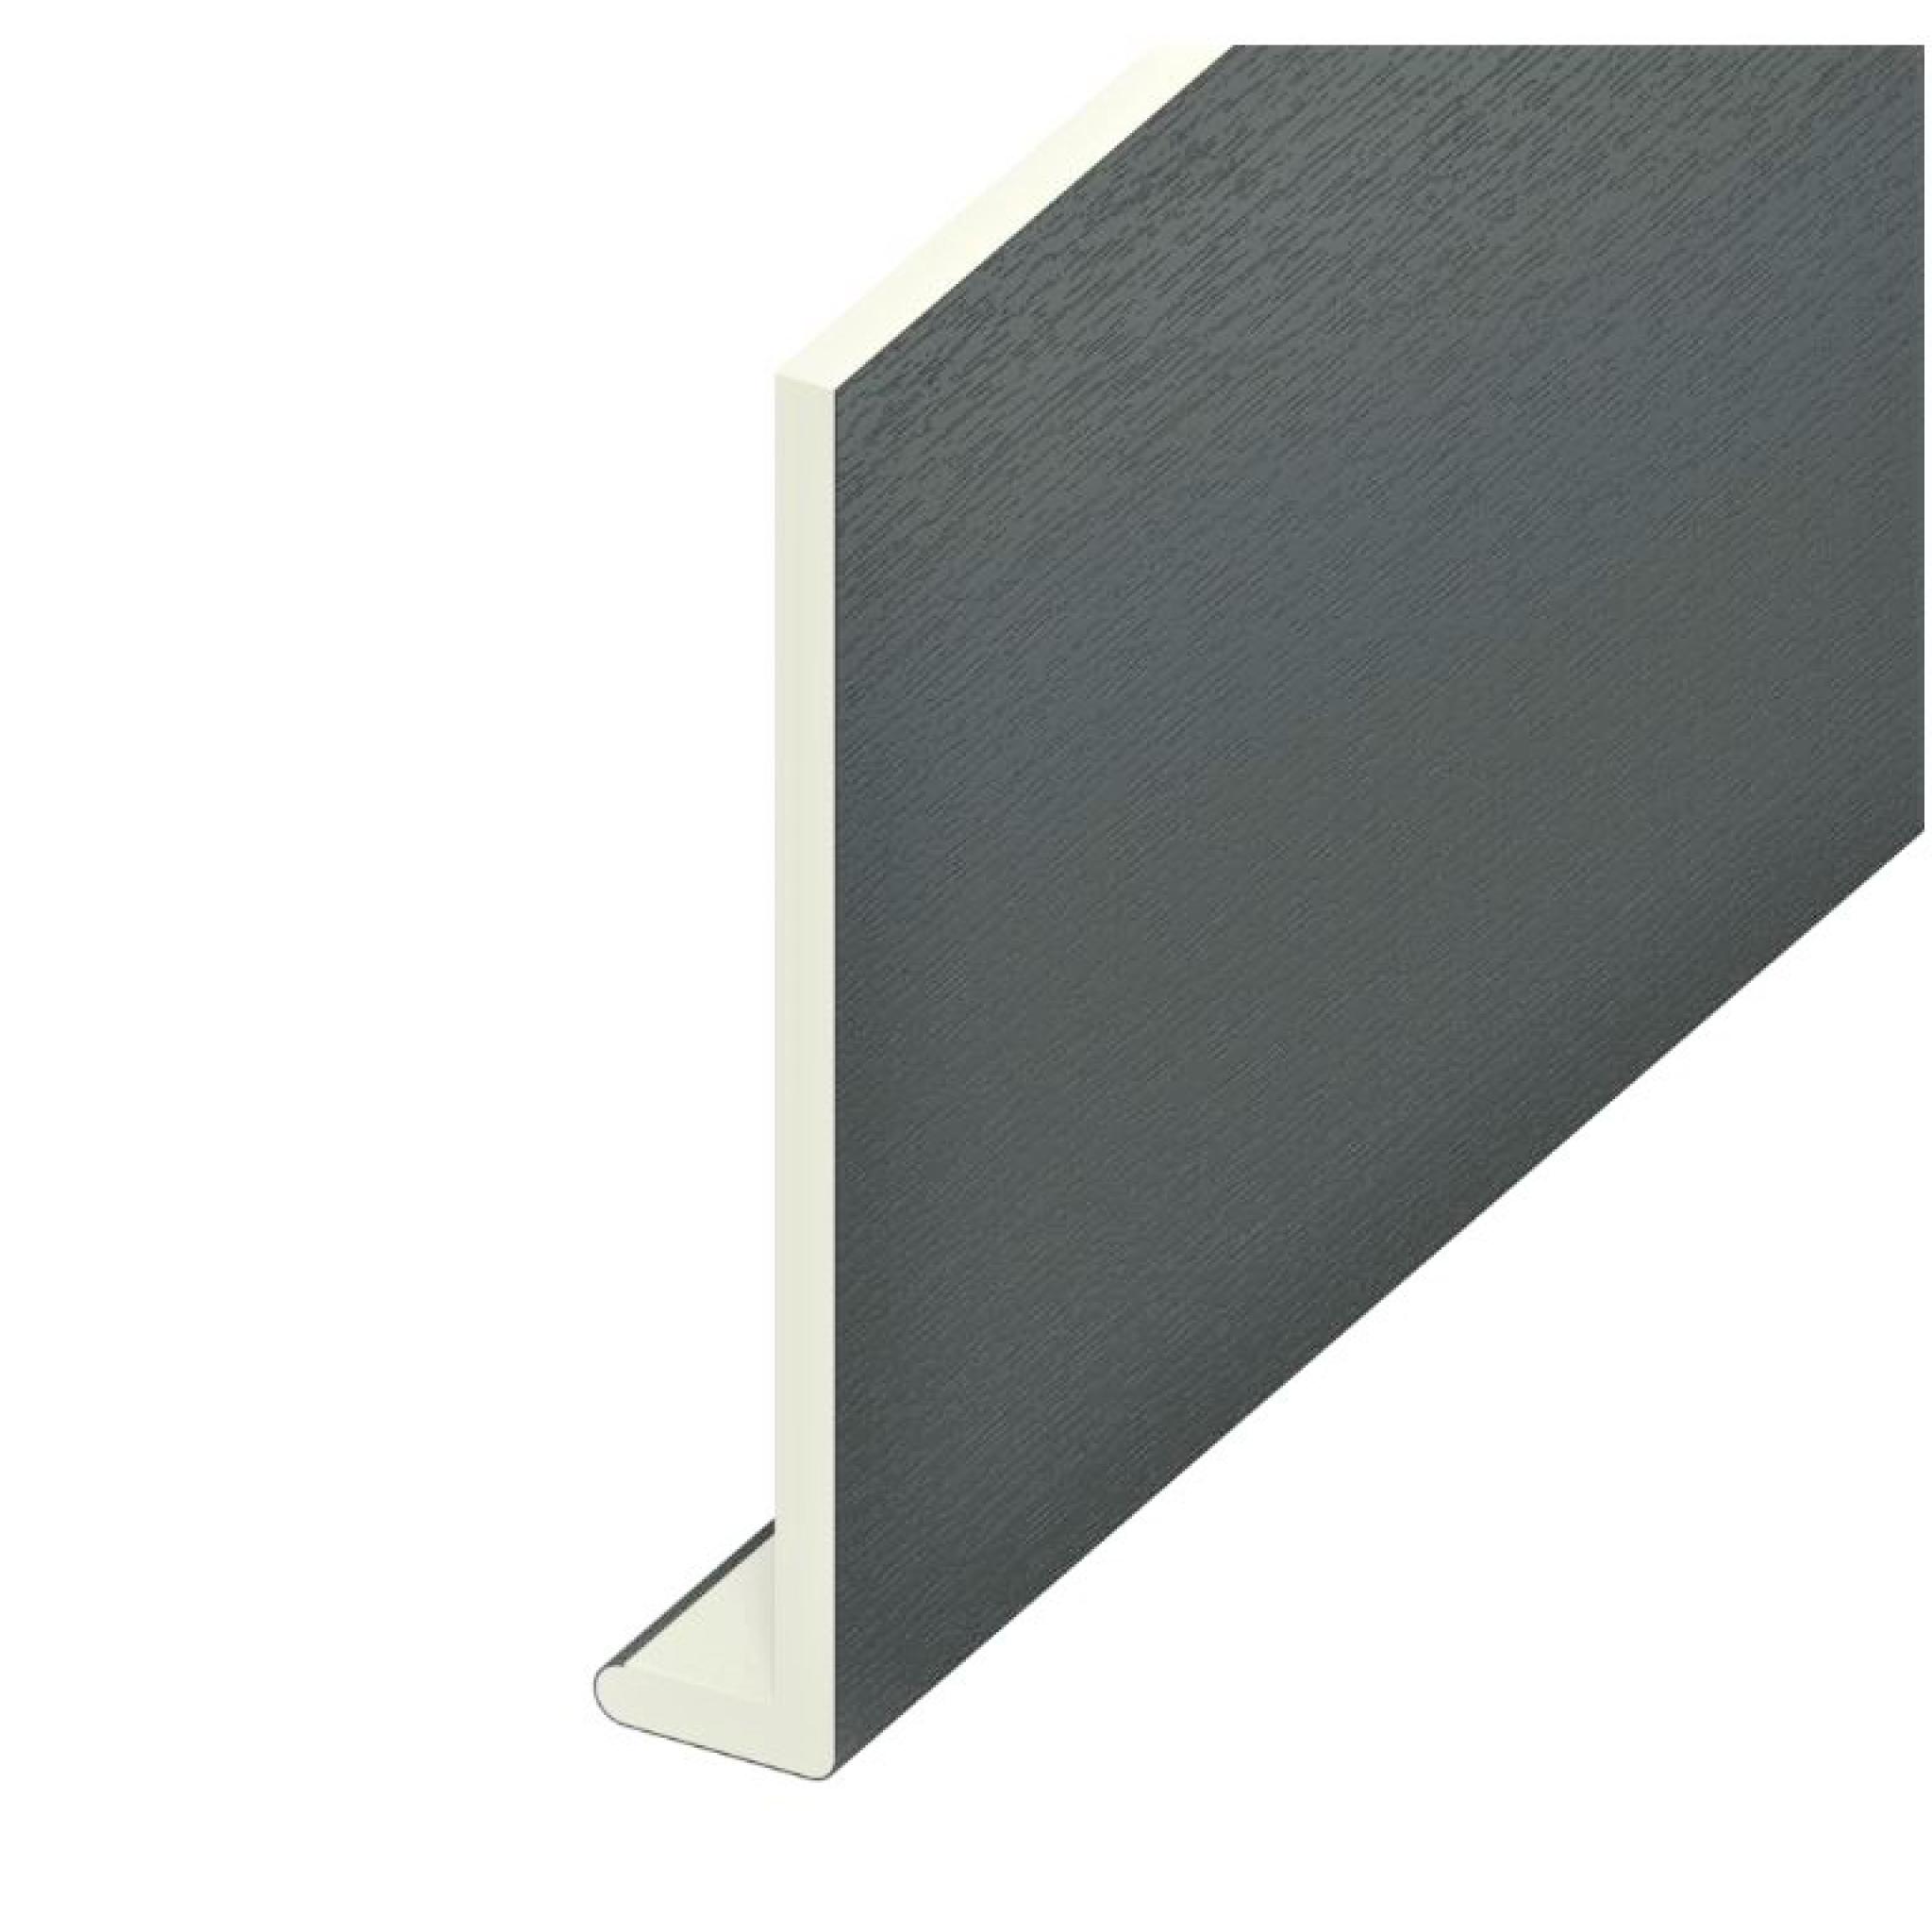 Anthracite Fascia Capping Board 9mm x 5m | UPVC Board